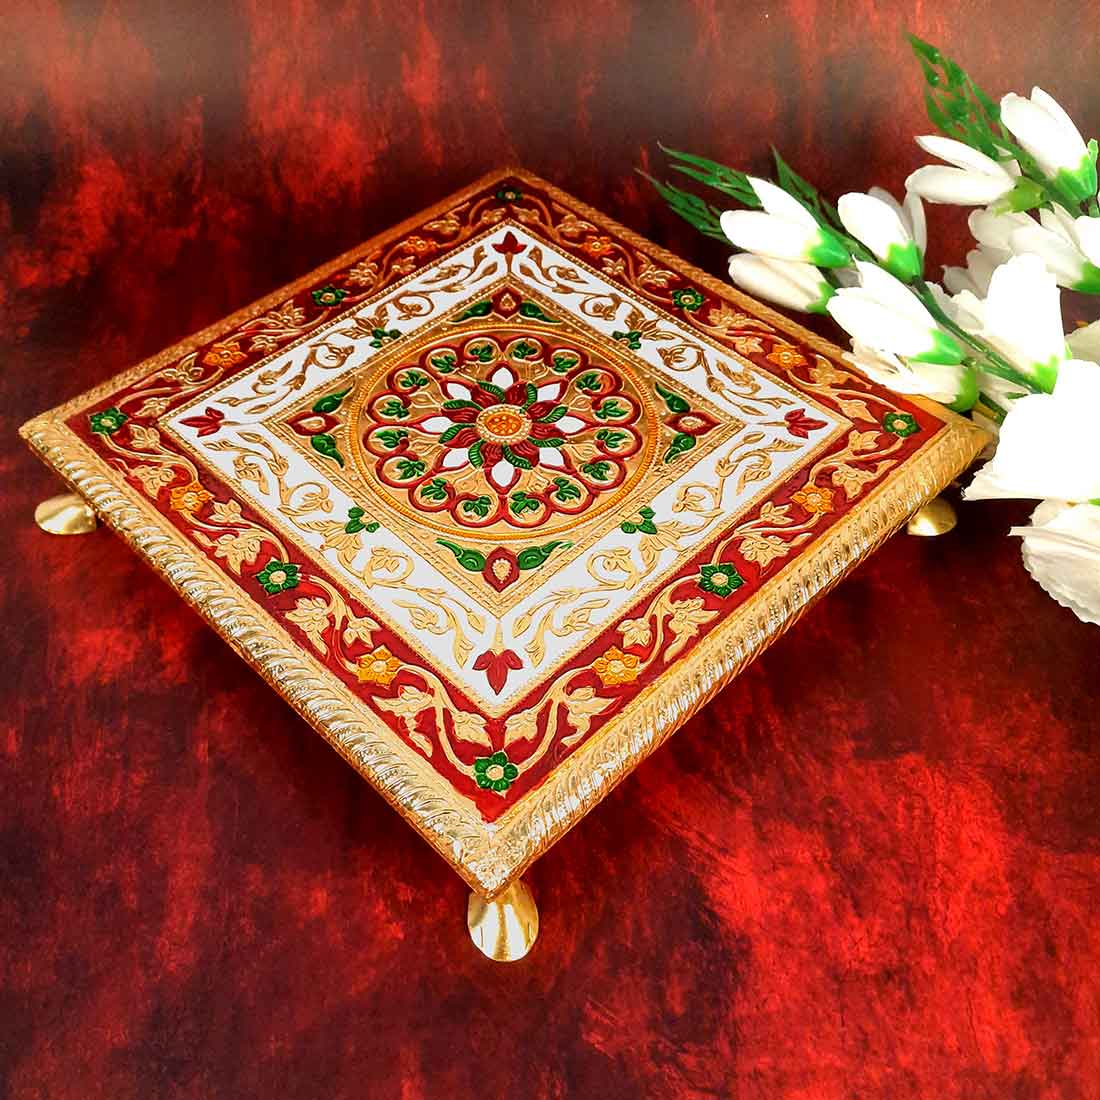 Pooja Chowki & Pooja Thali Set -Prayer Accessories -  For Pooja, Weddings & Festivals - Pack of 2